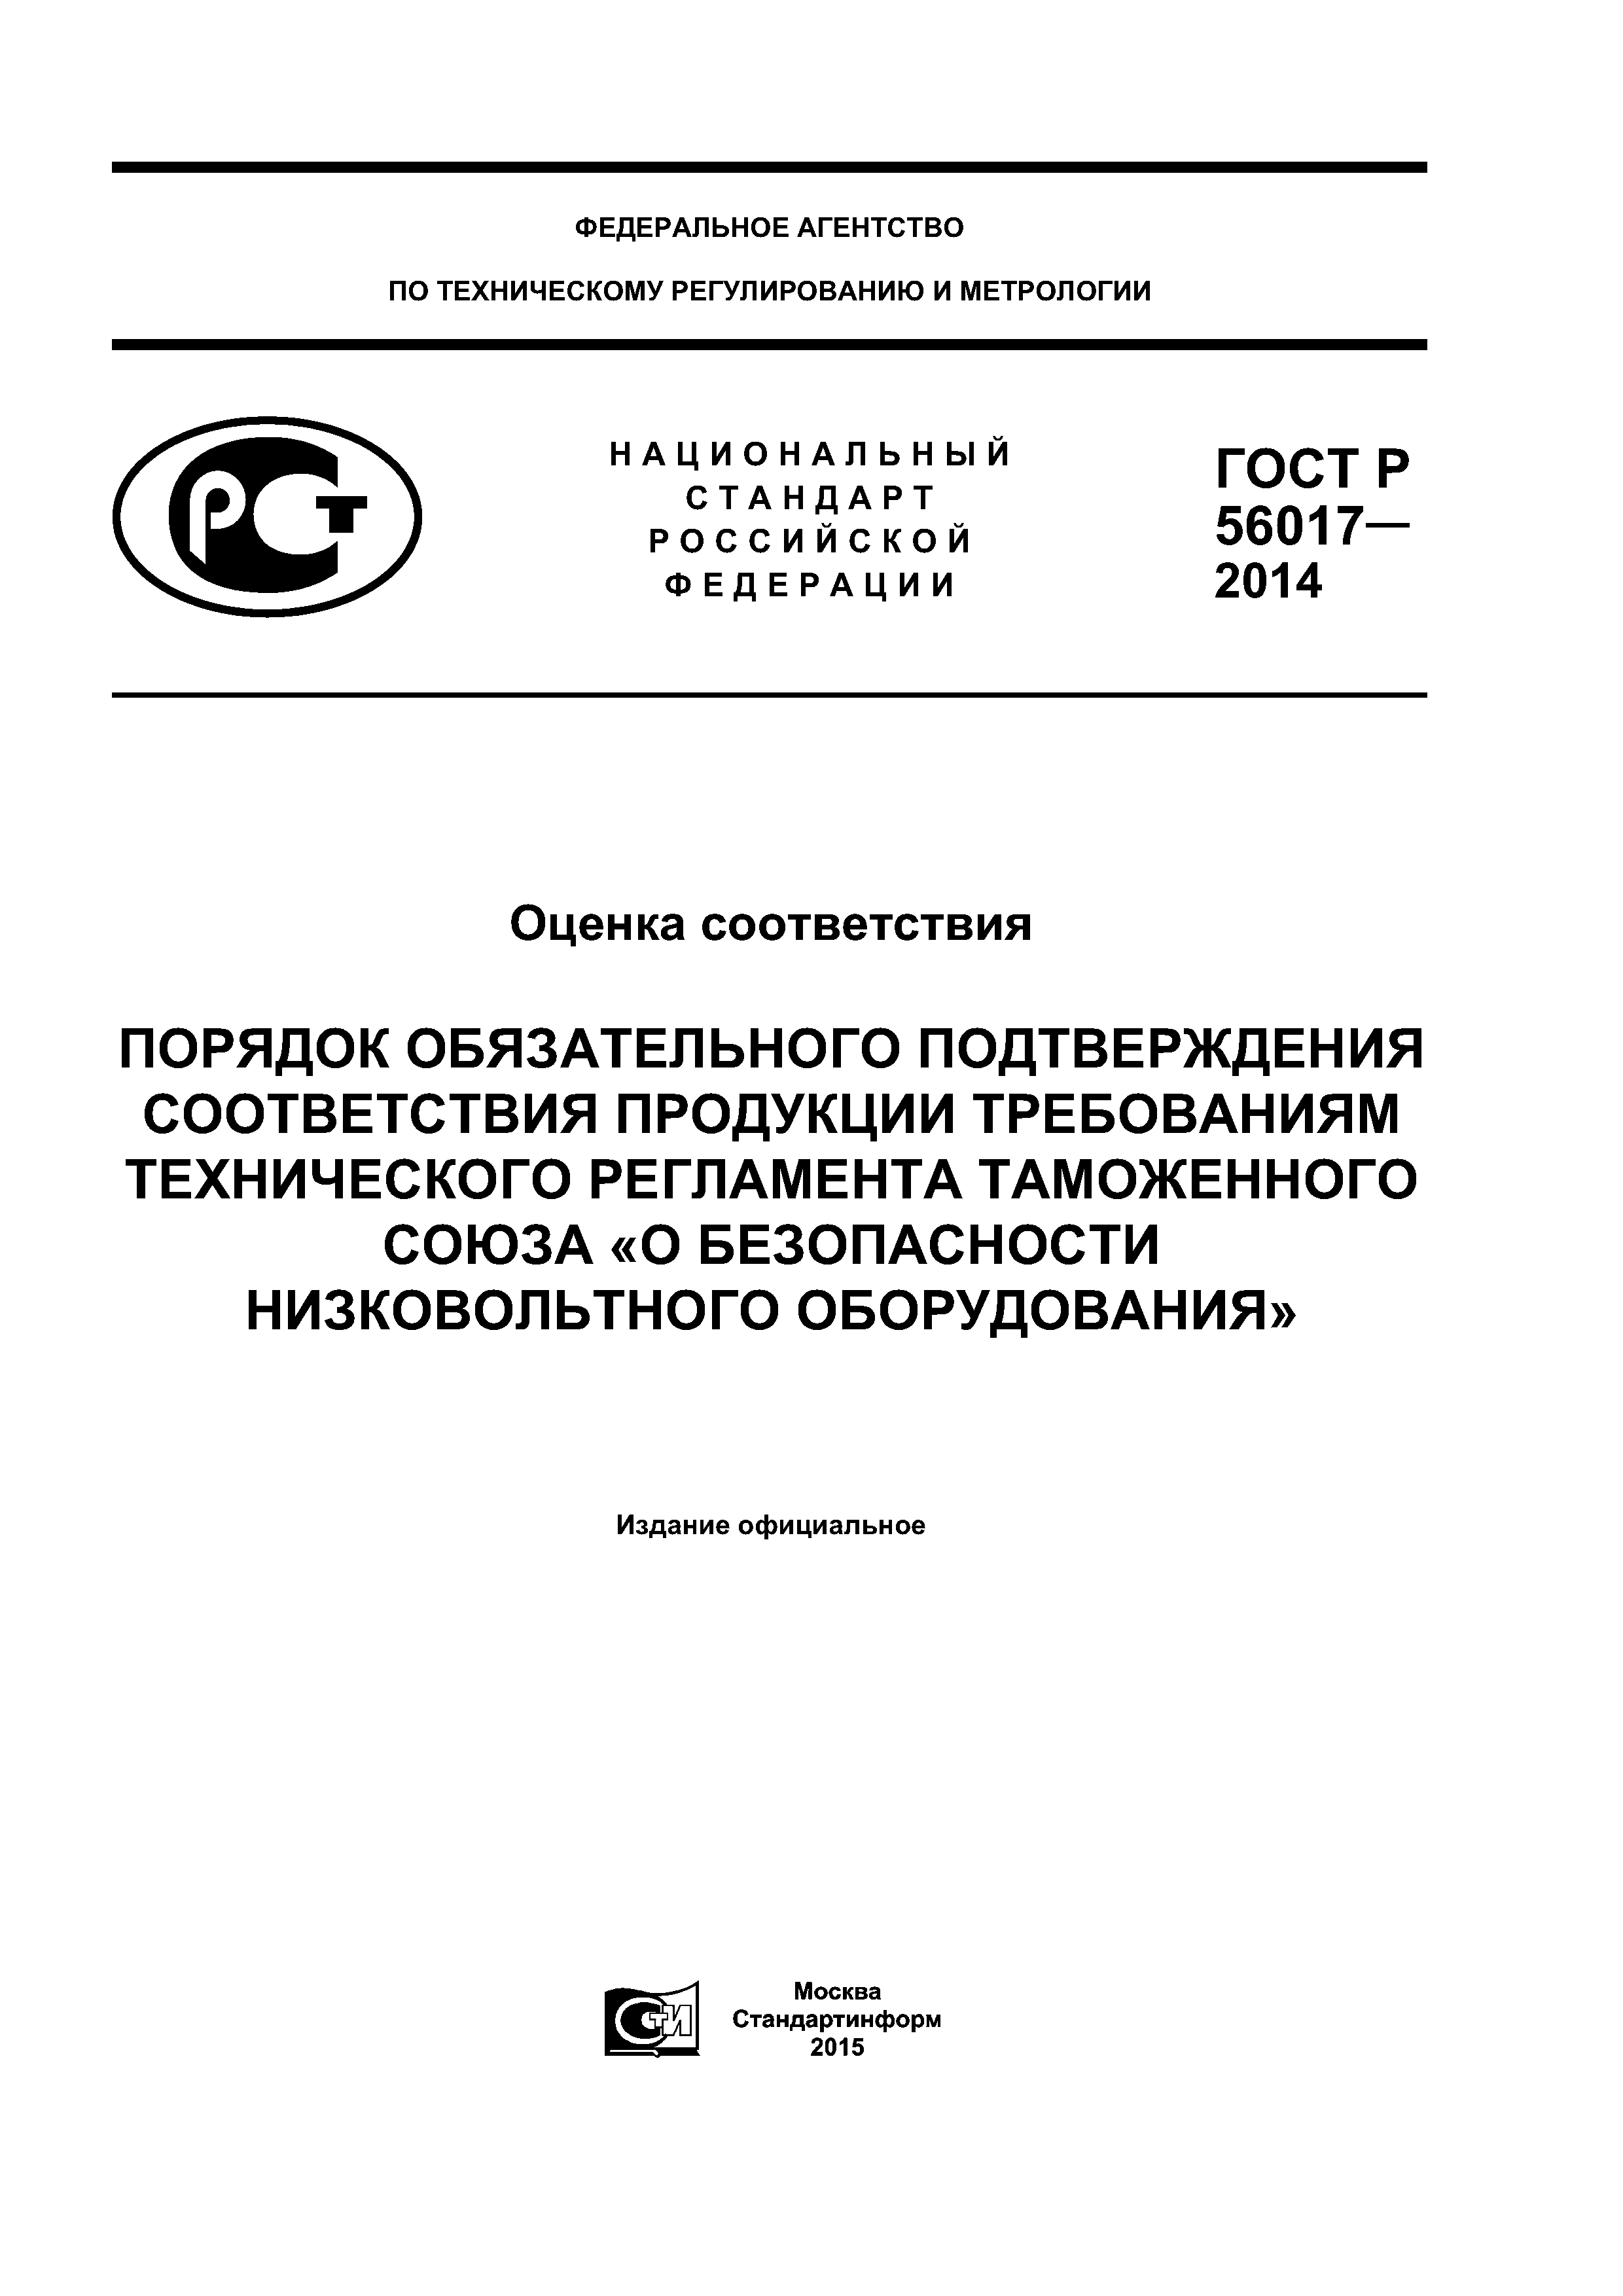 ГОСТ Р 56017-2014